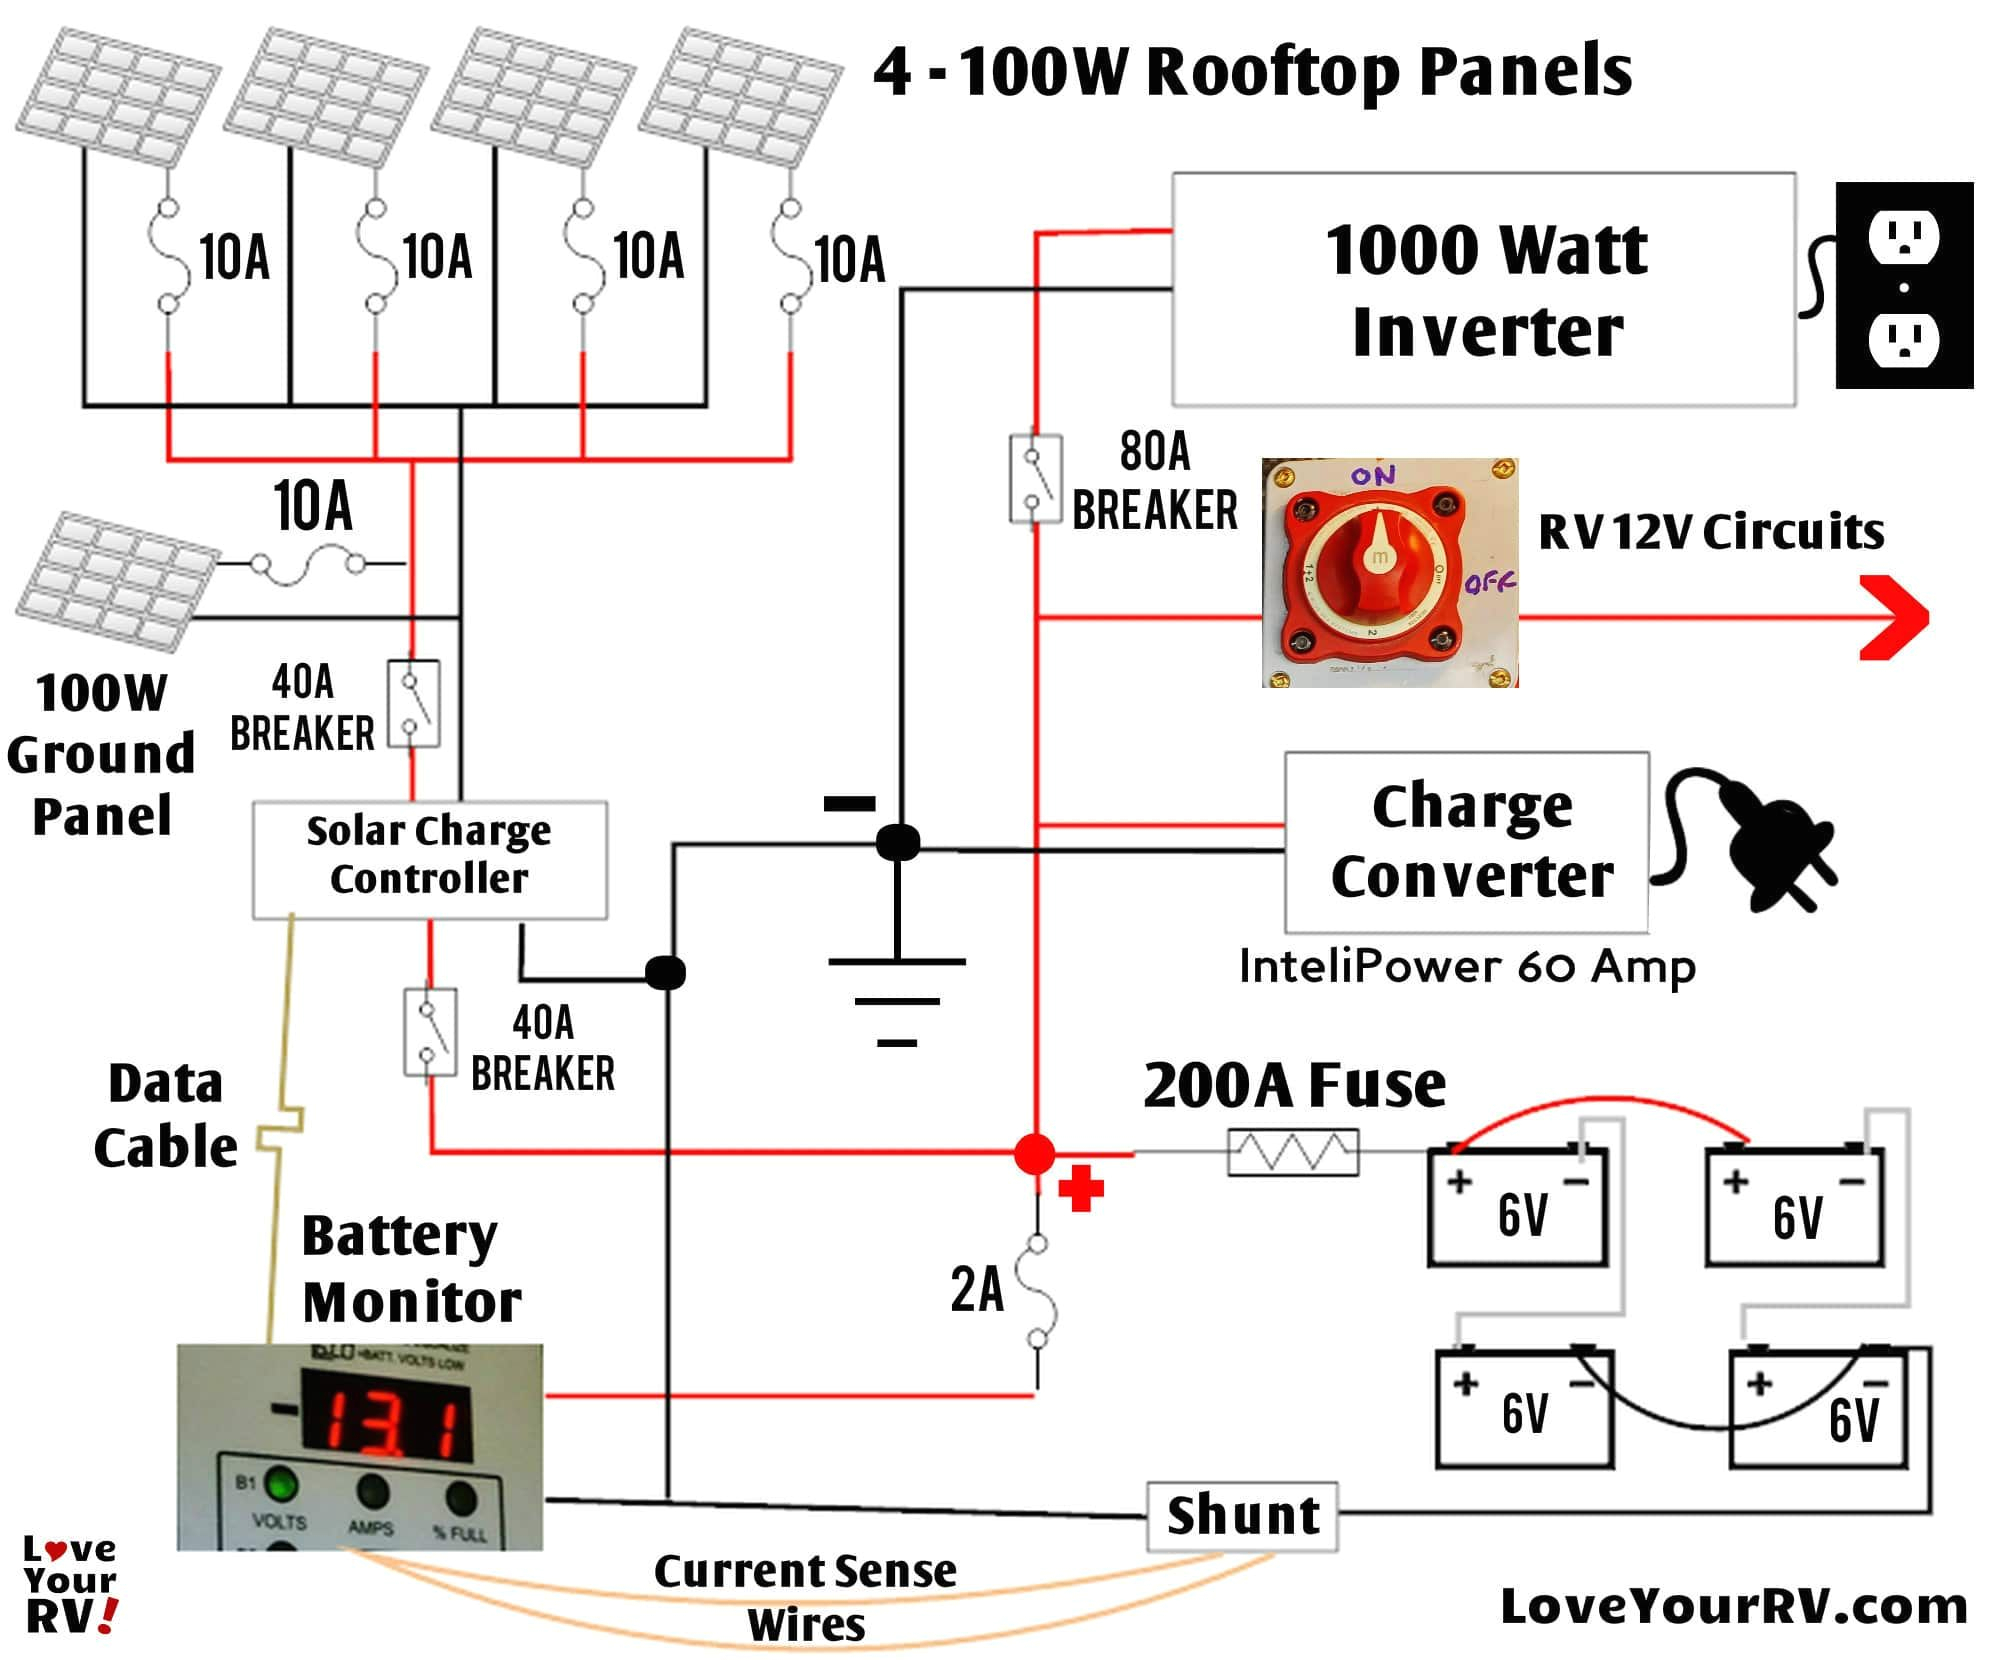 kyocera solar panels solar panel wiring diagram with fuses dhads net kyocera solar panels solar panel